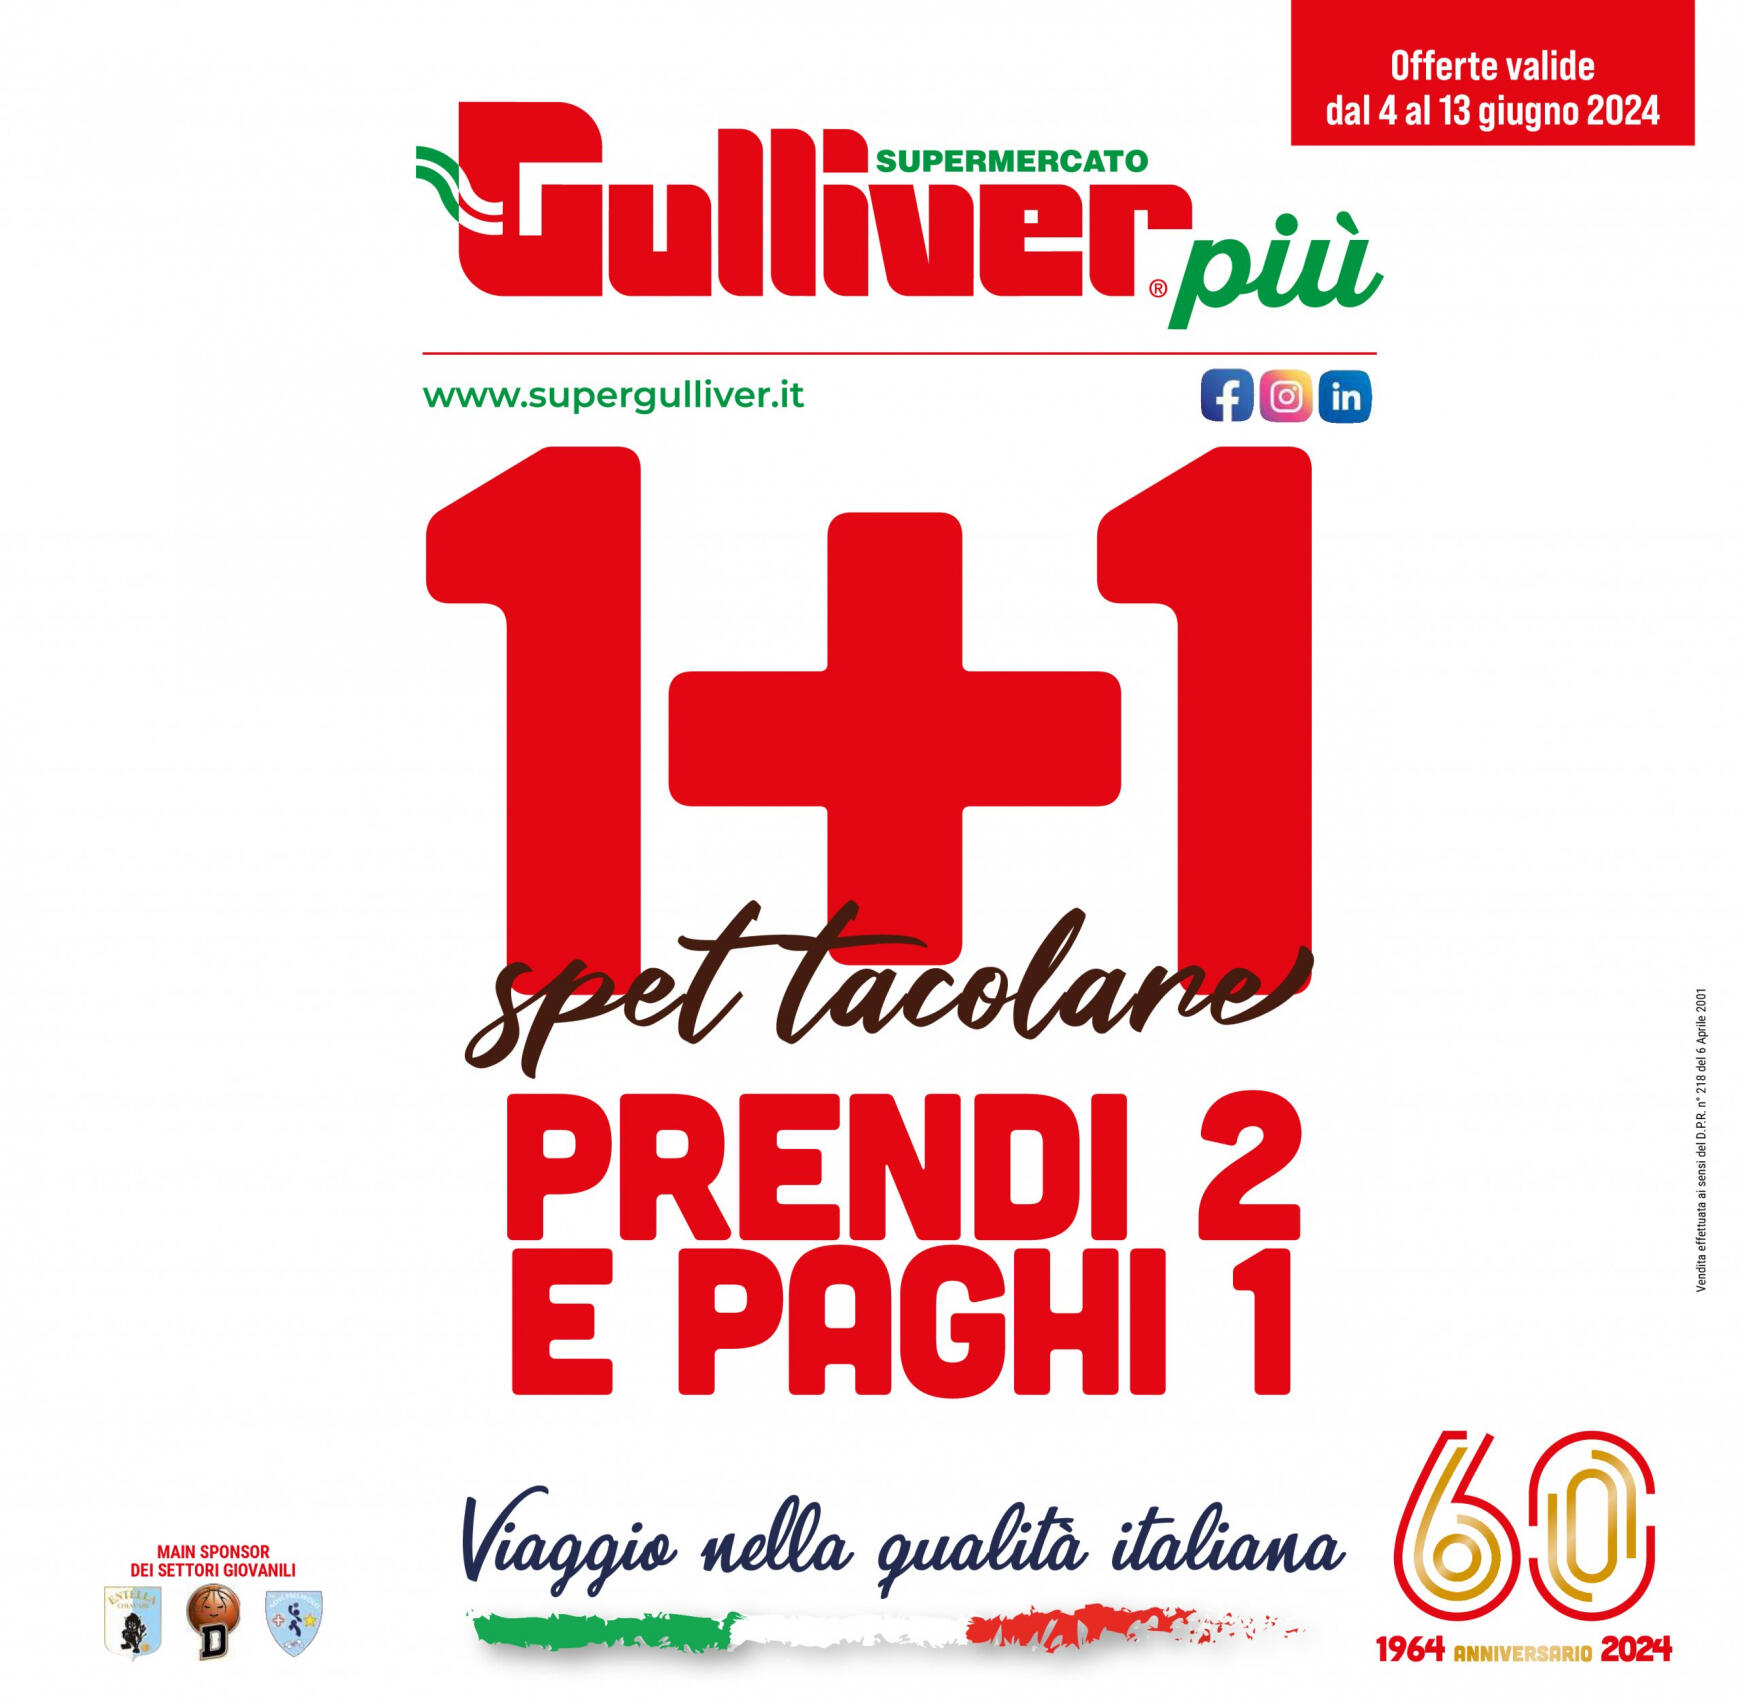 gulliver - Nuovo volantino Gulliver 04.06. - 13.06. - page: 1